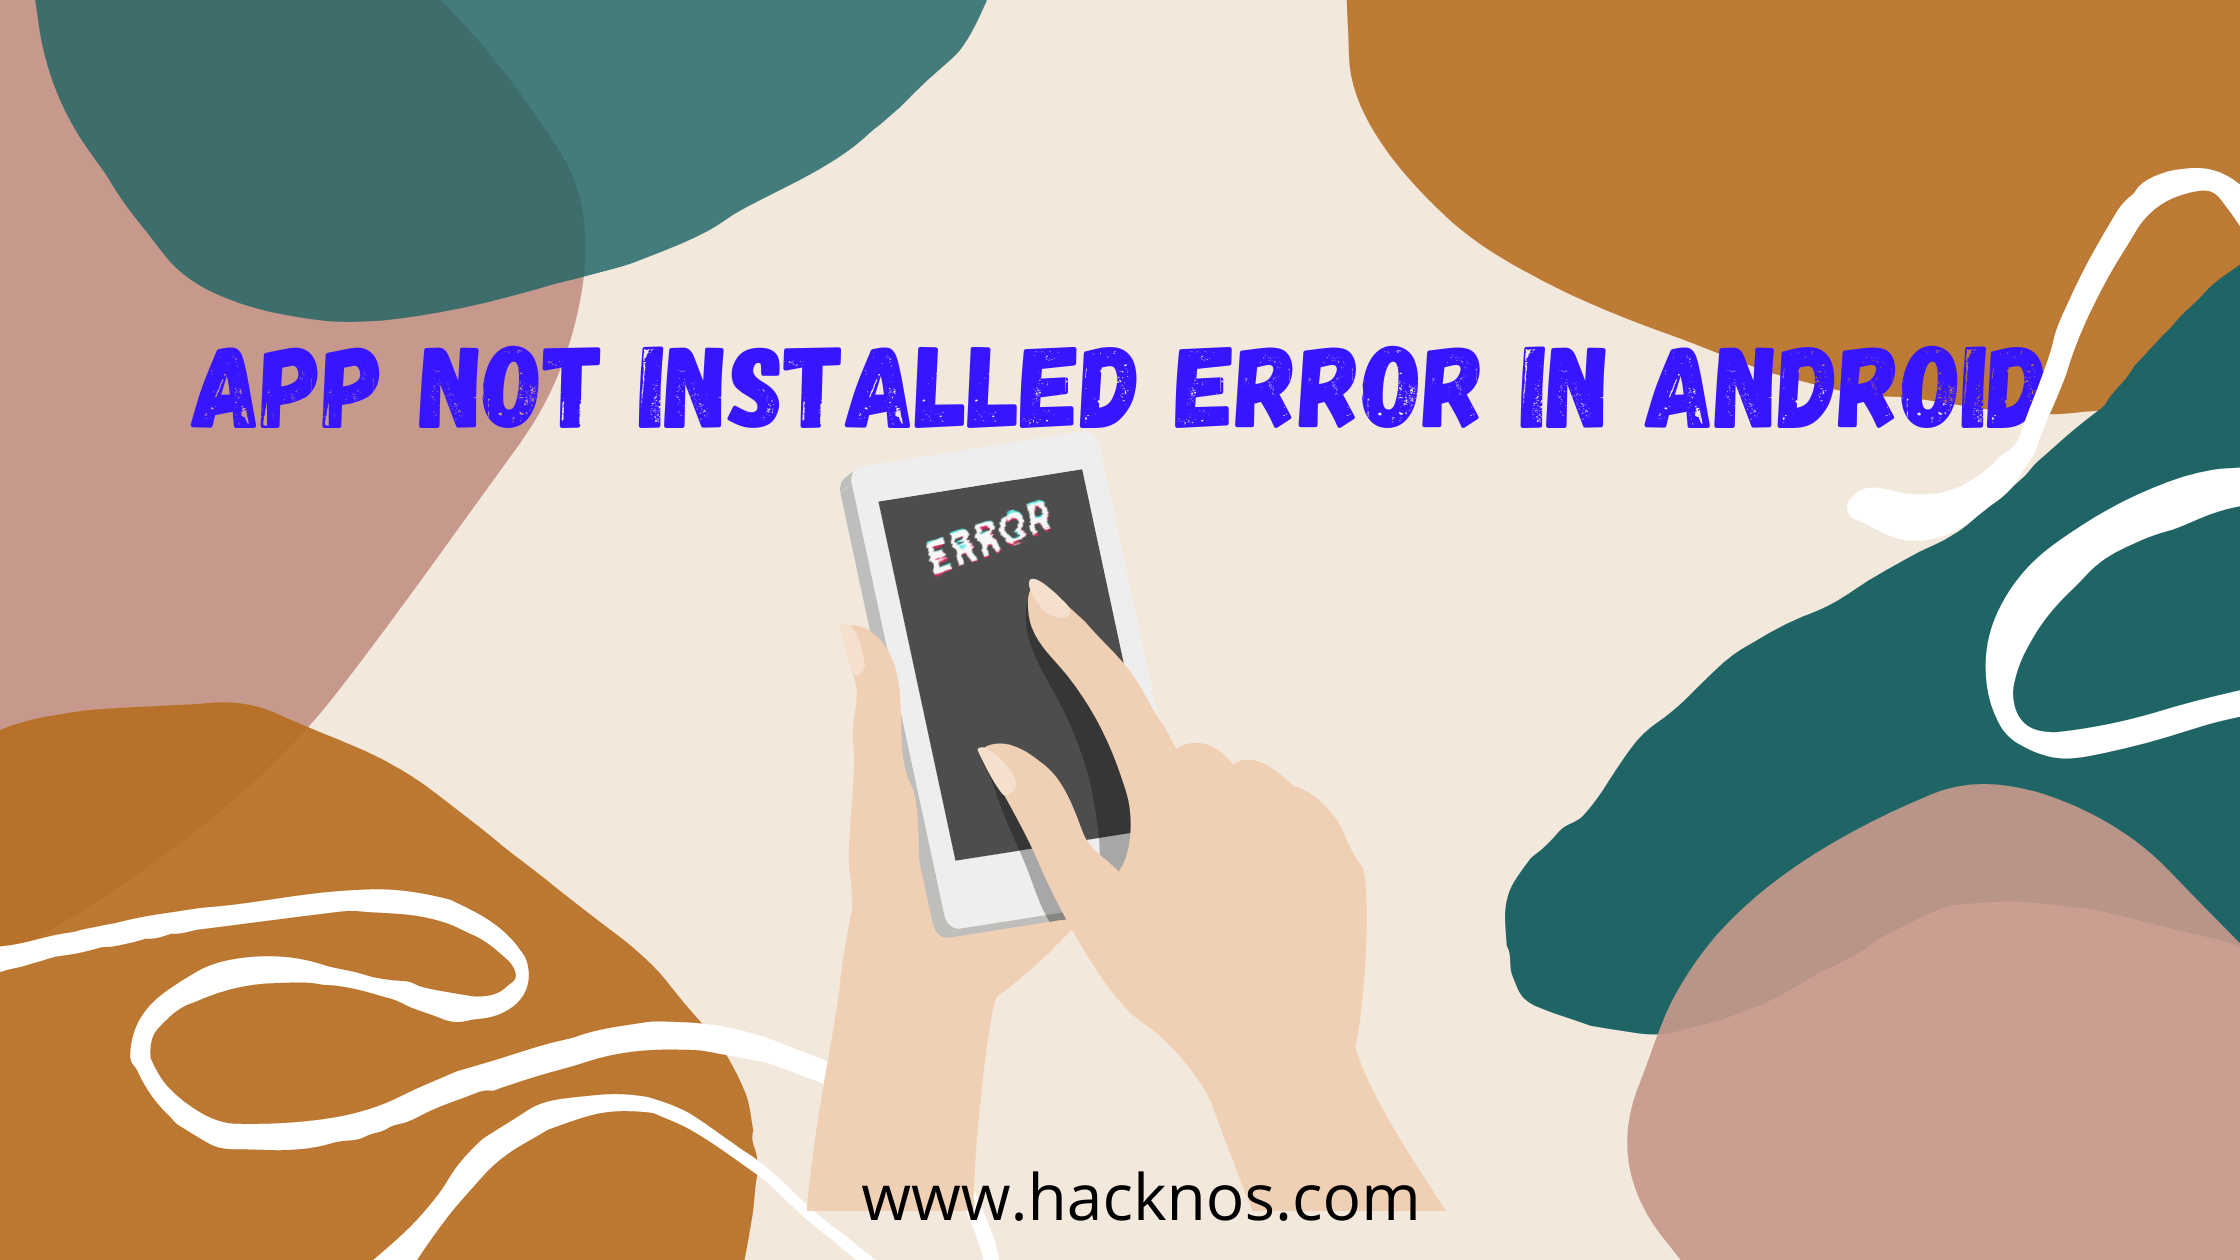 qooapp app not installed